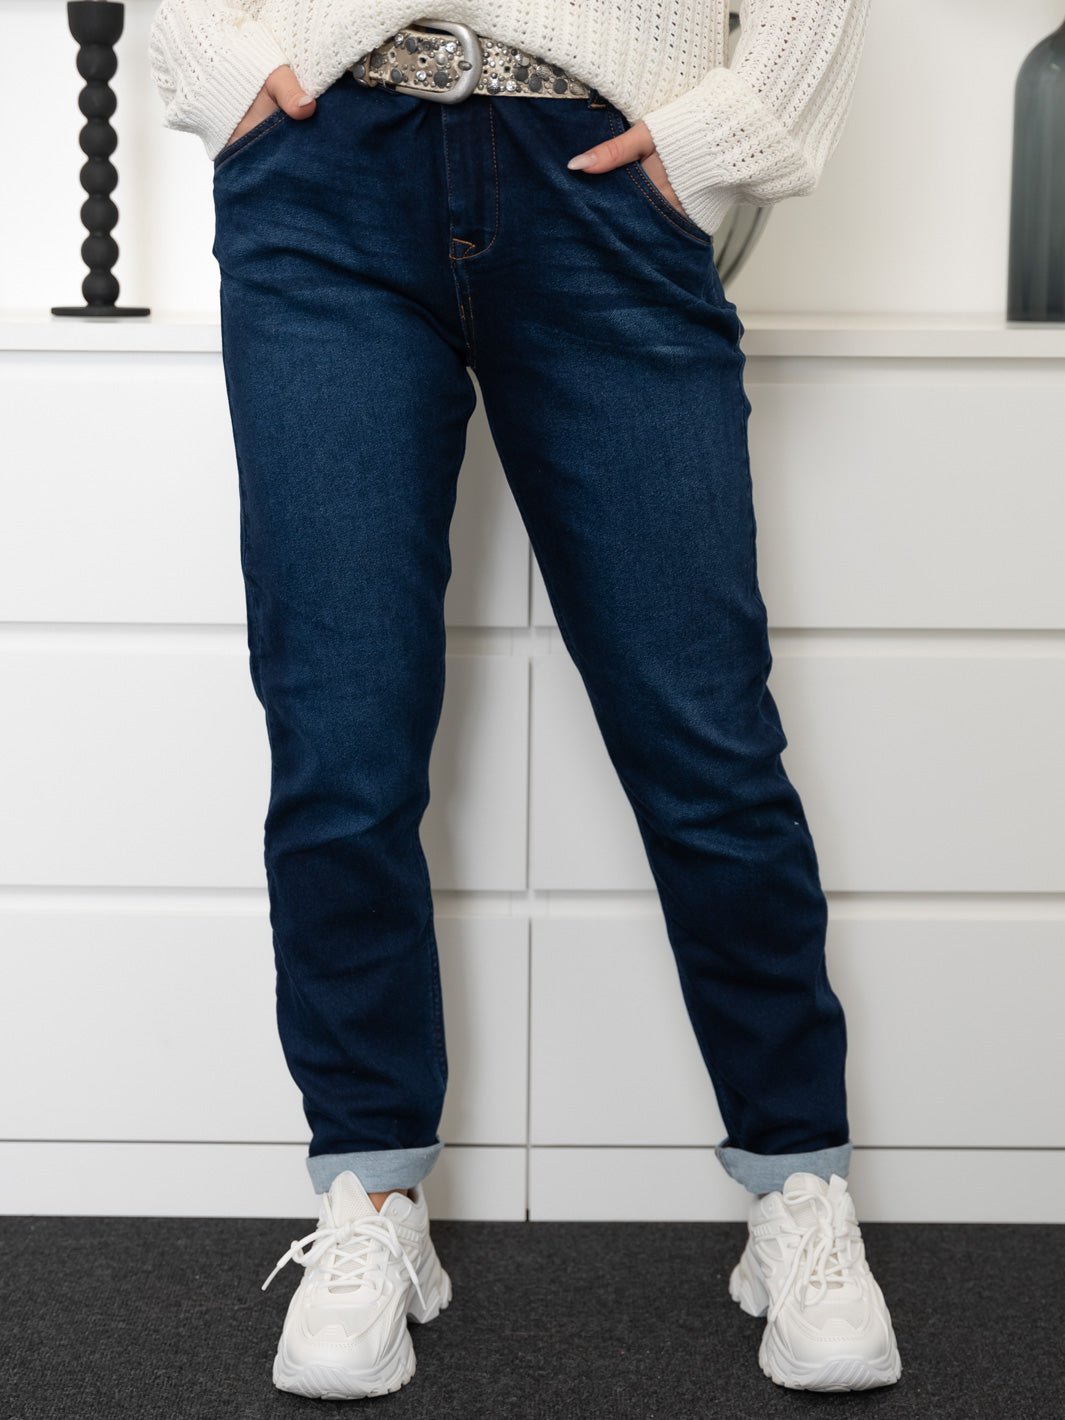 Fransa FRvilja jeans indigo blue denim - Online-Mode